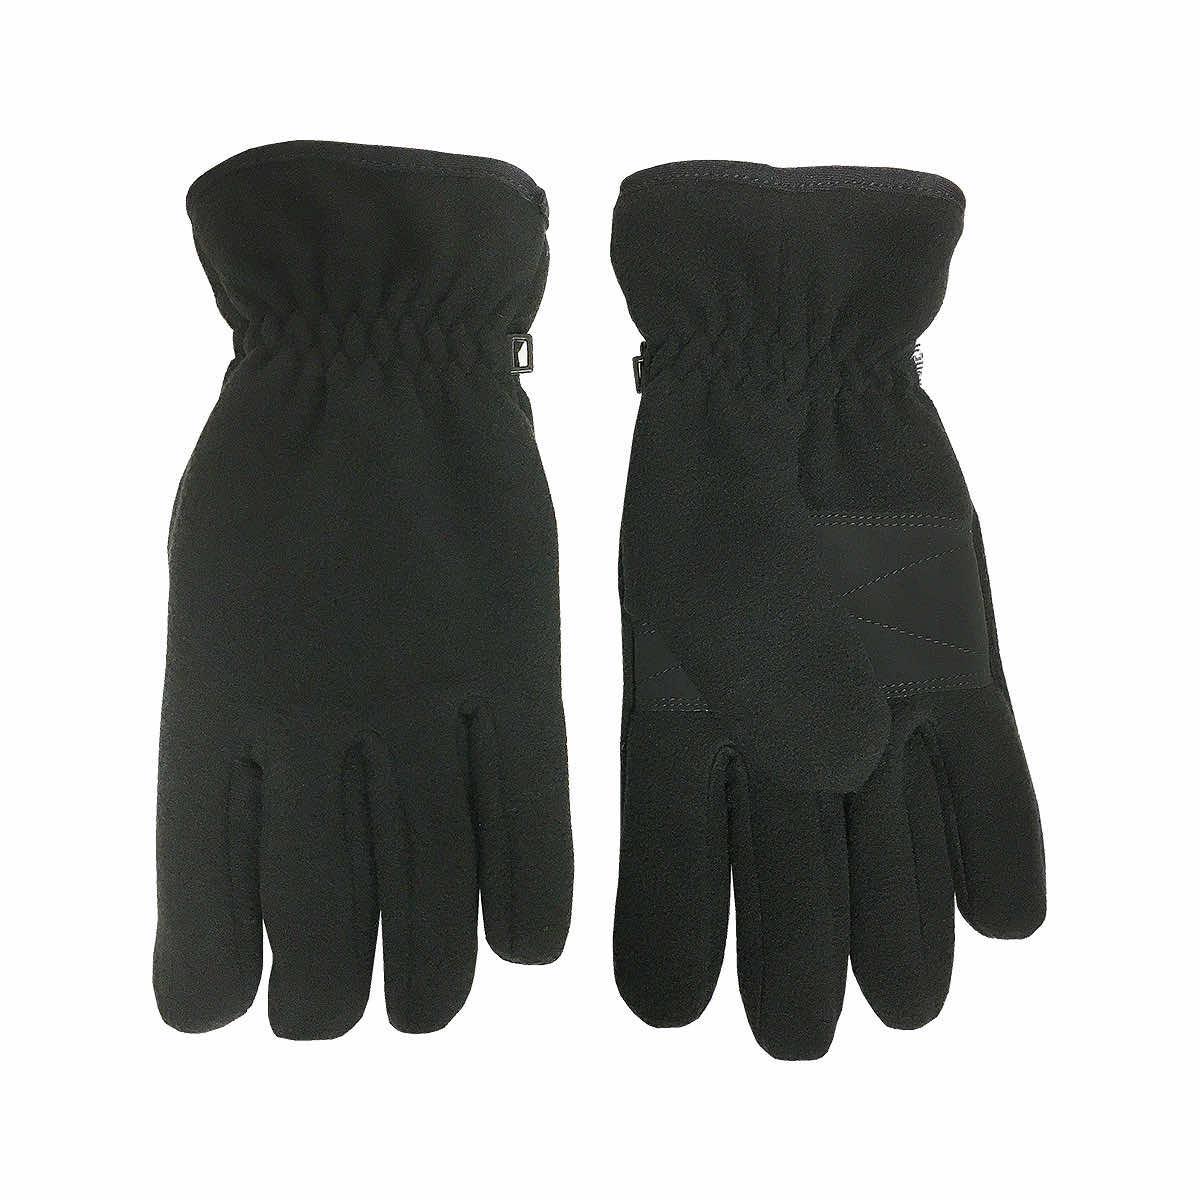  Microfleece Gloves